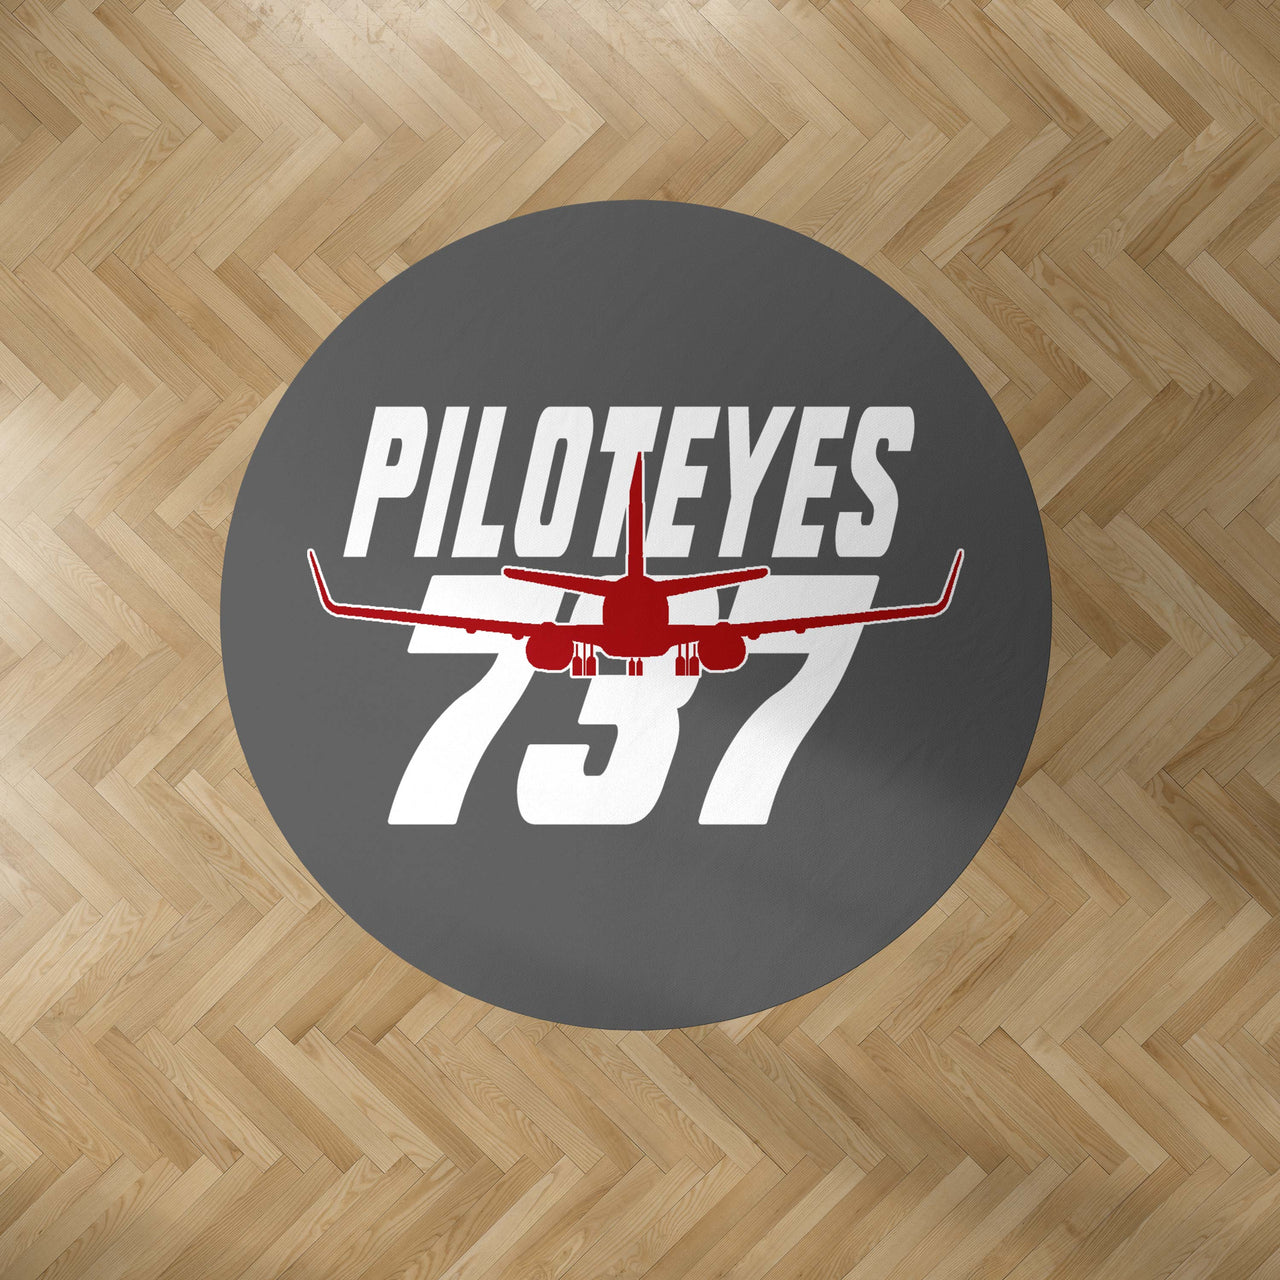 Amazing Piloteyes737 Designed Carpet & Floor Mats (Round)